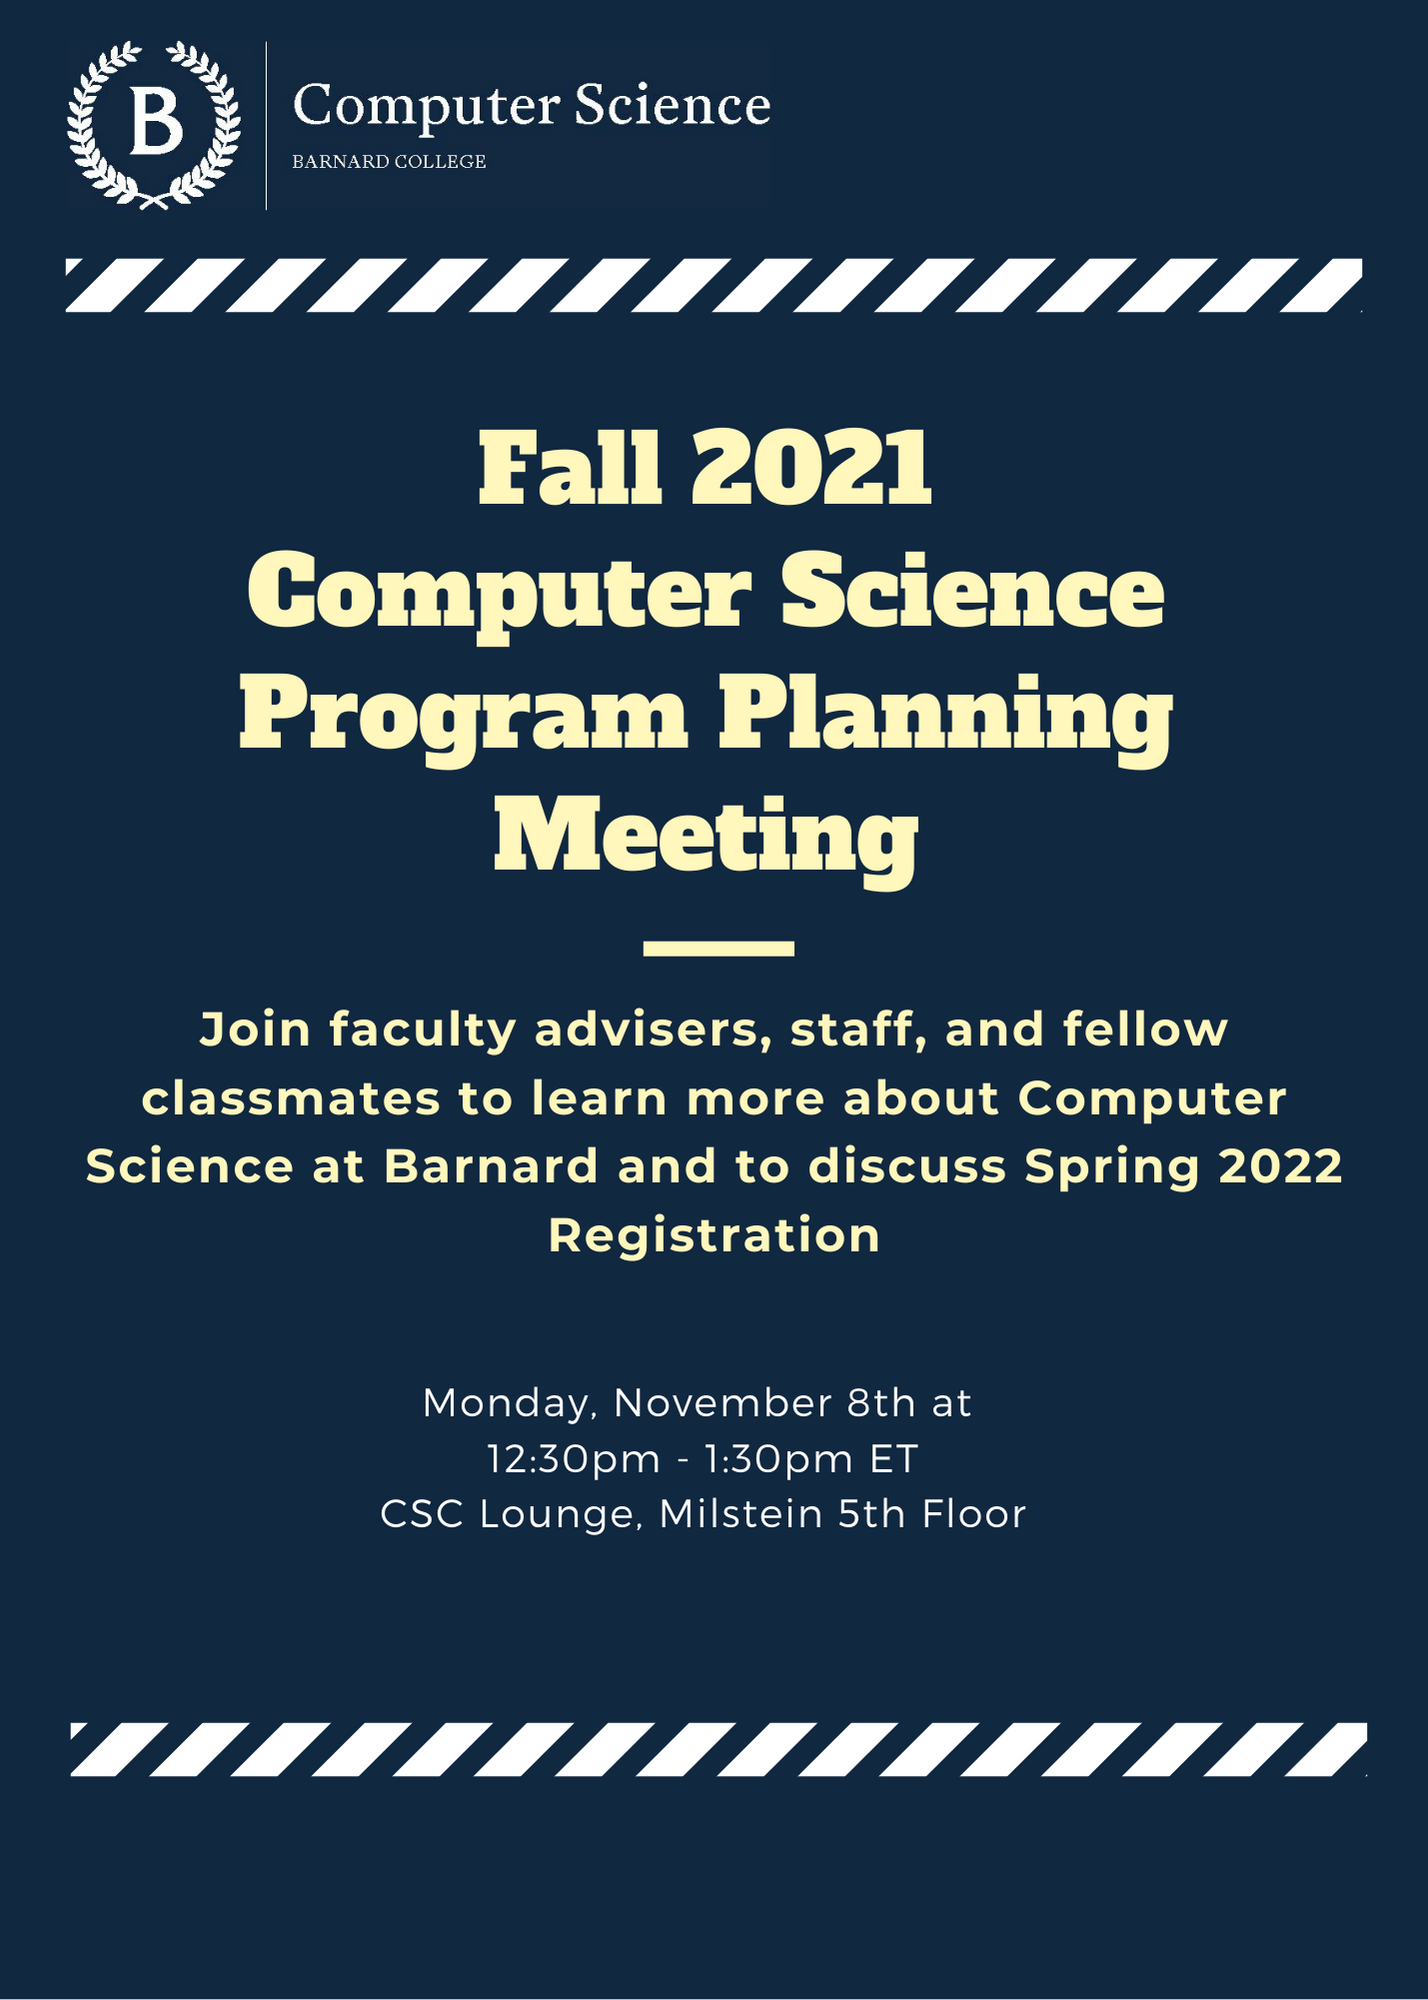 Fall 2021 Program Planning